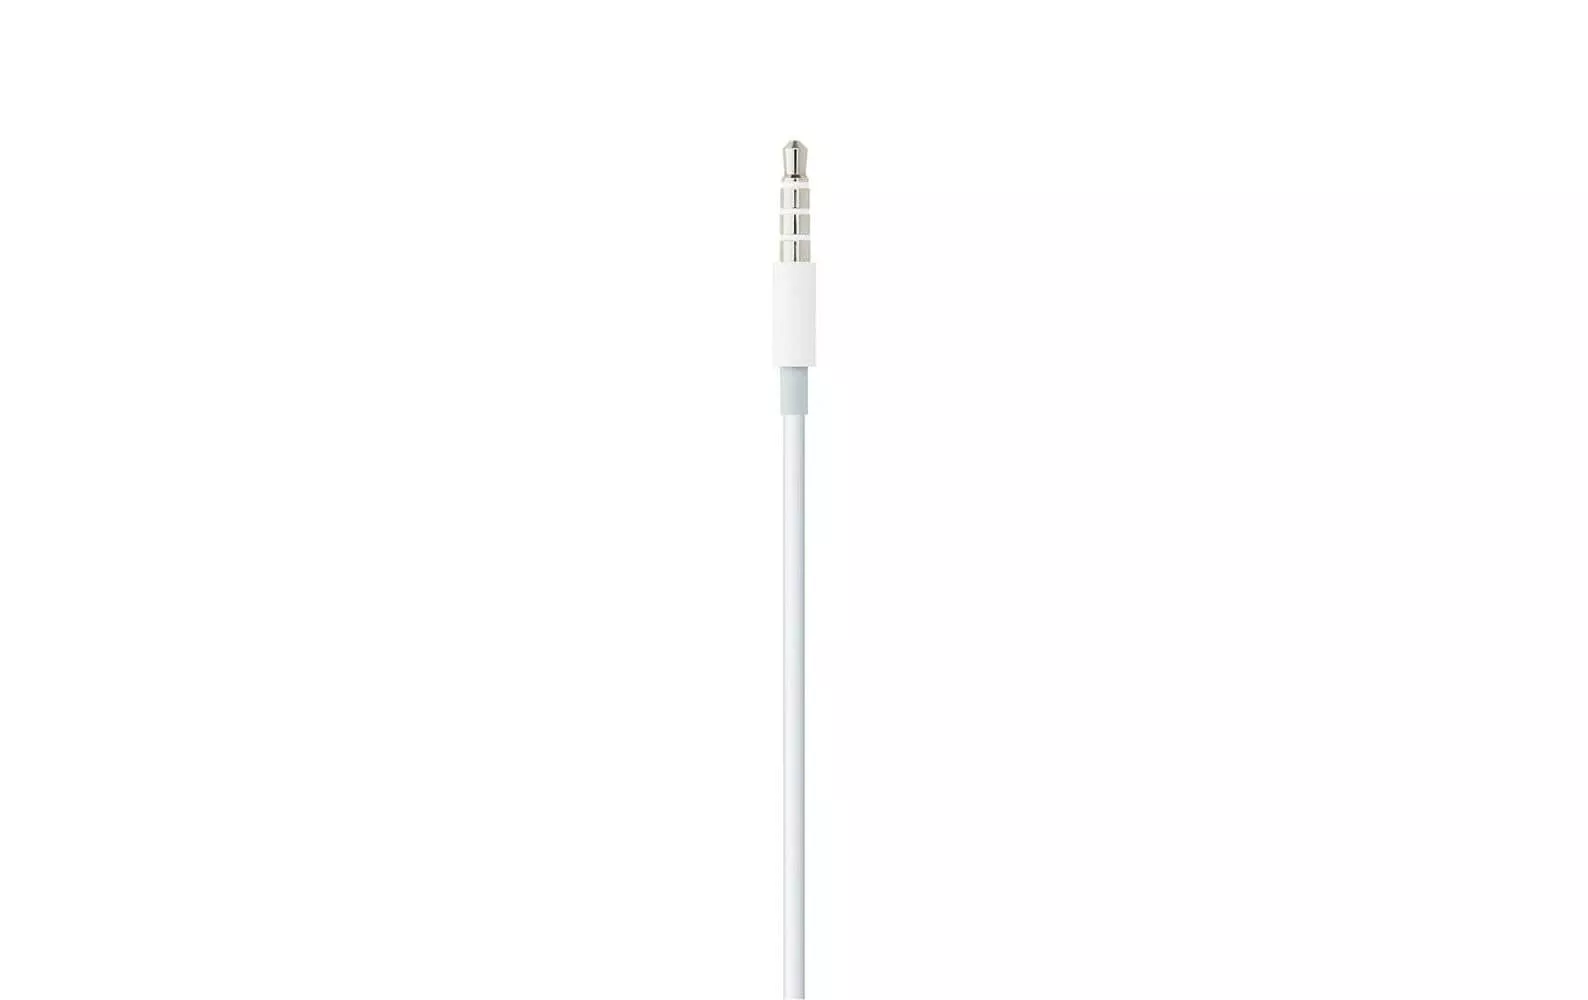 Apple écouteurs EarPods JACK - intra auriculaire (origine) - C90